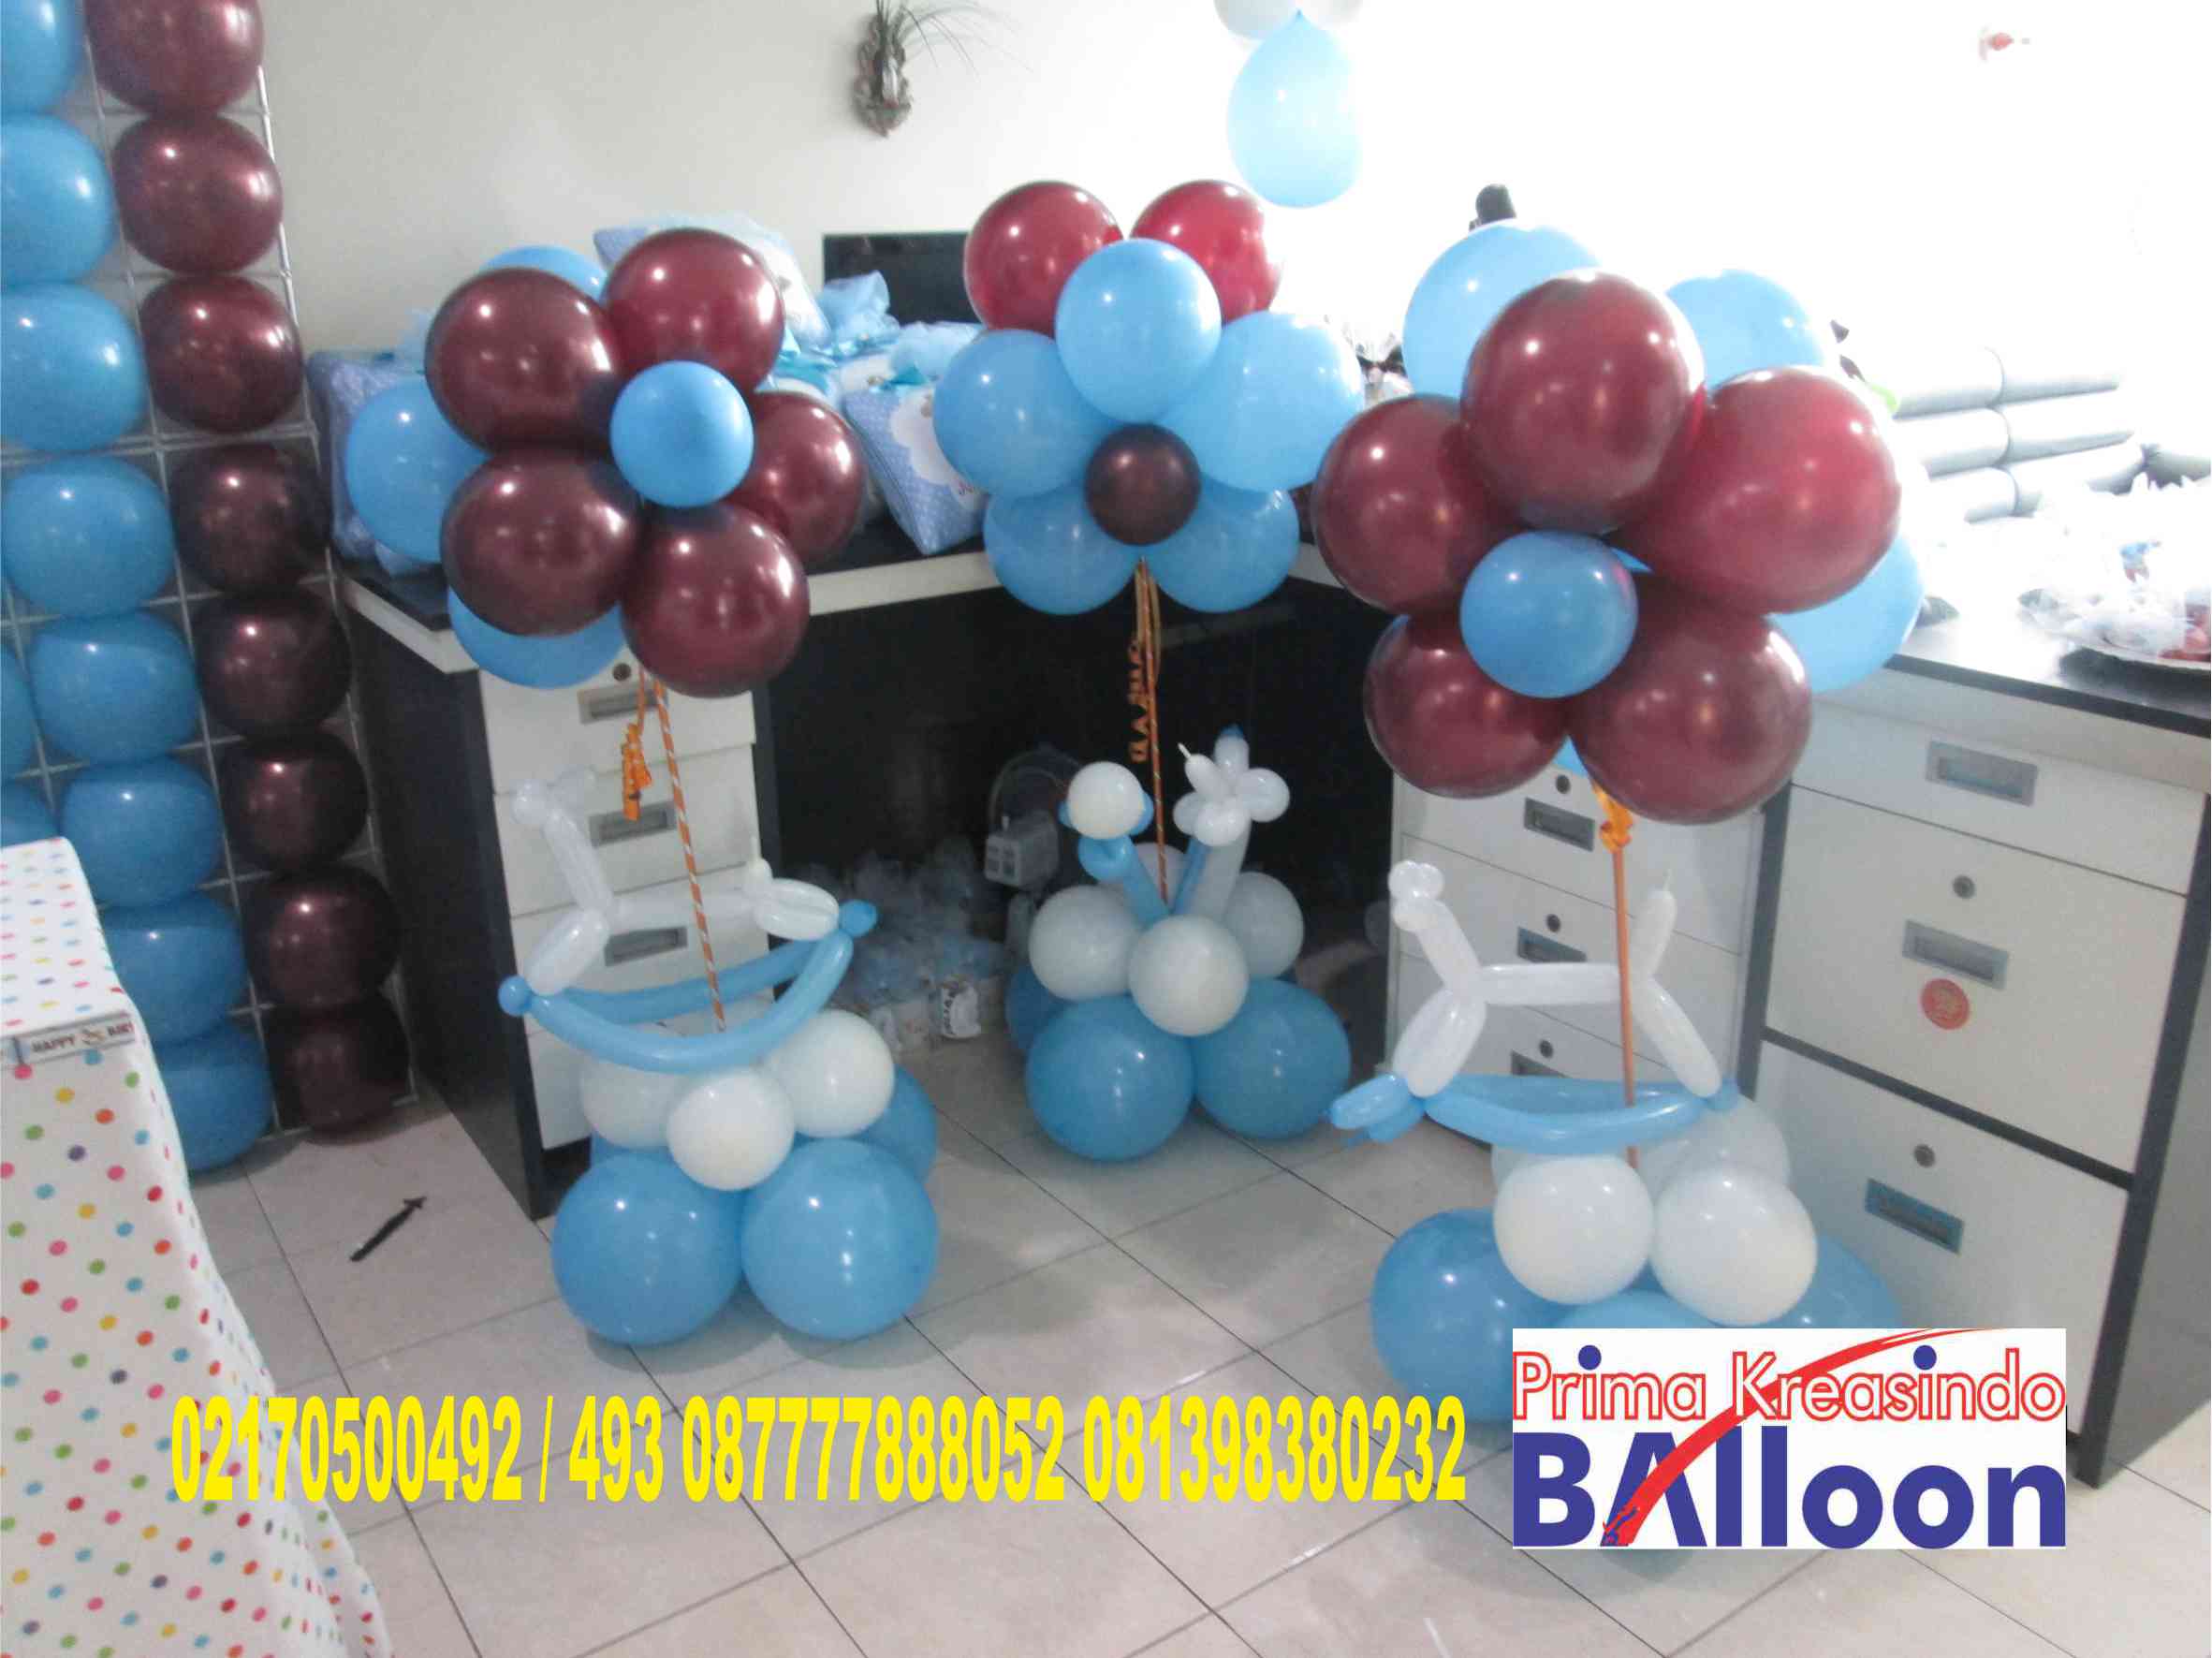  Dekorasi balon backdrop ulang tahun di apartemen ambasador 